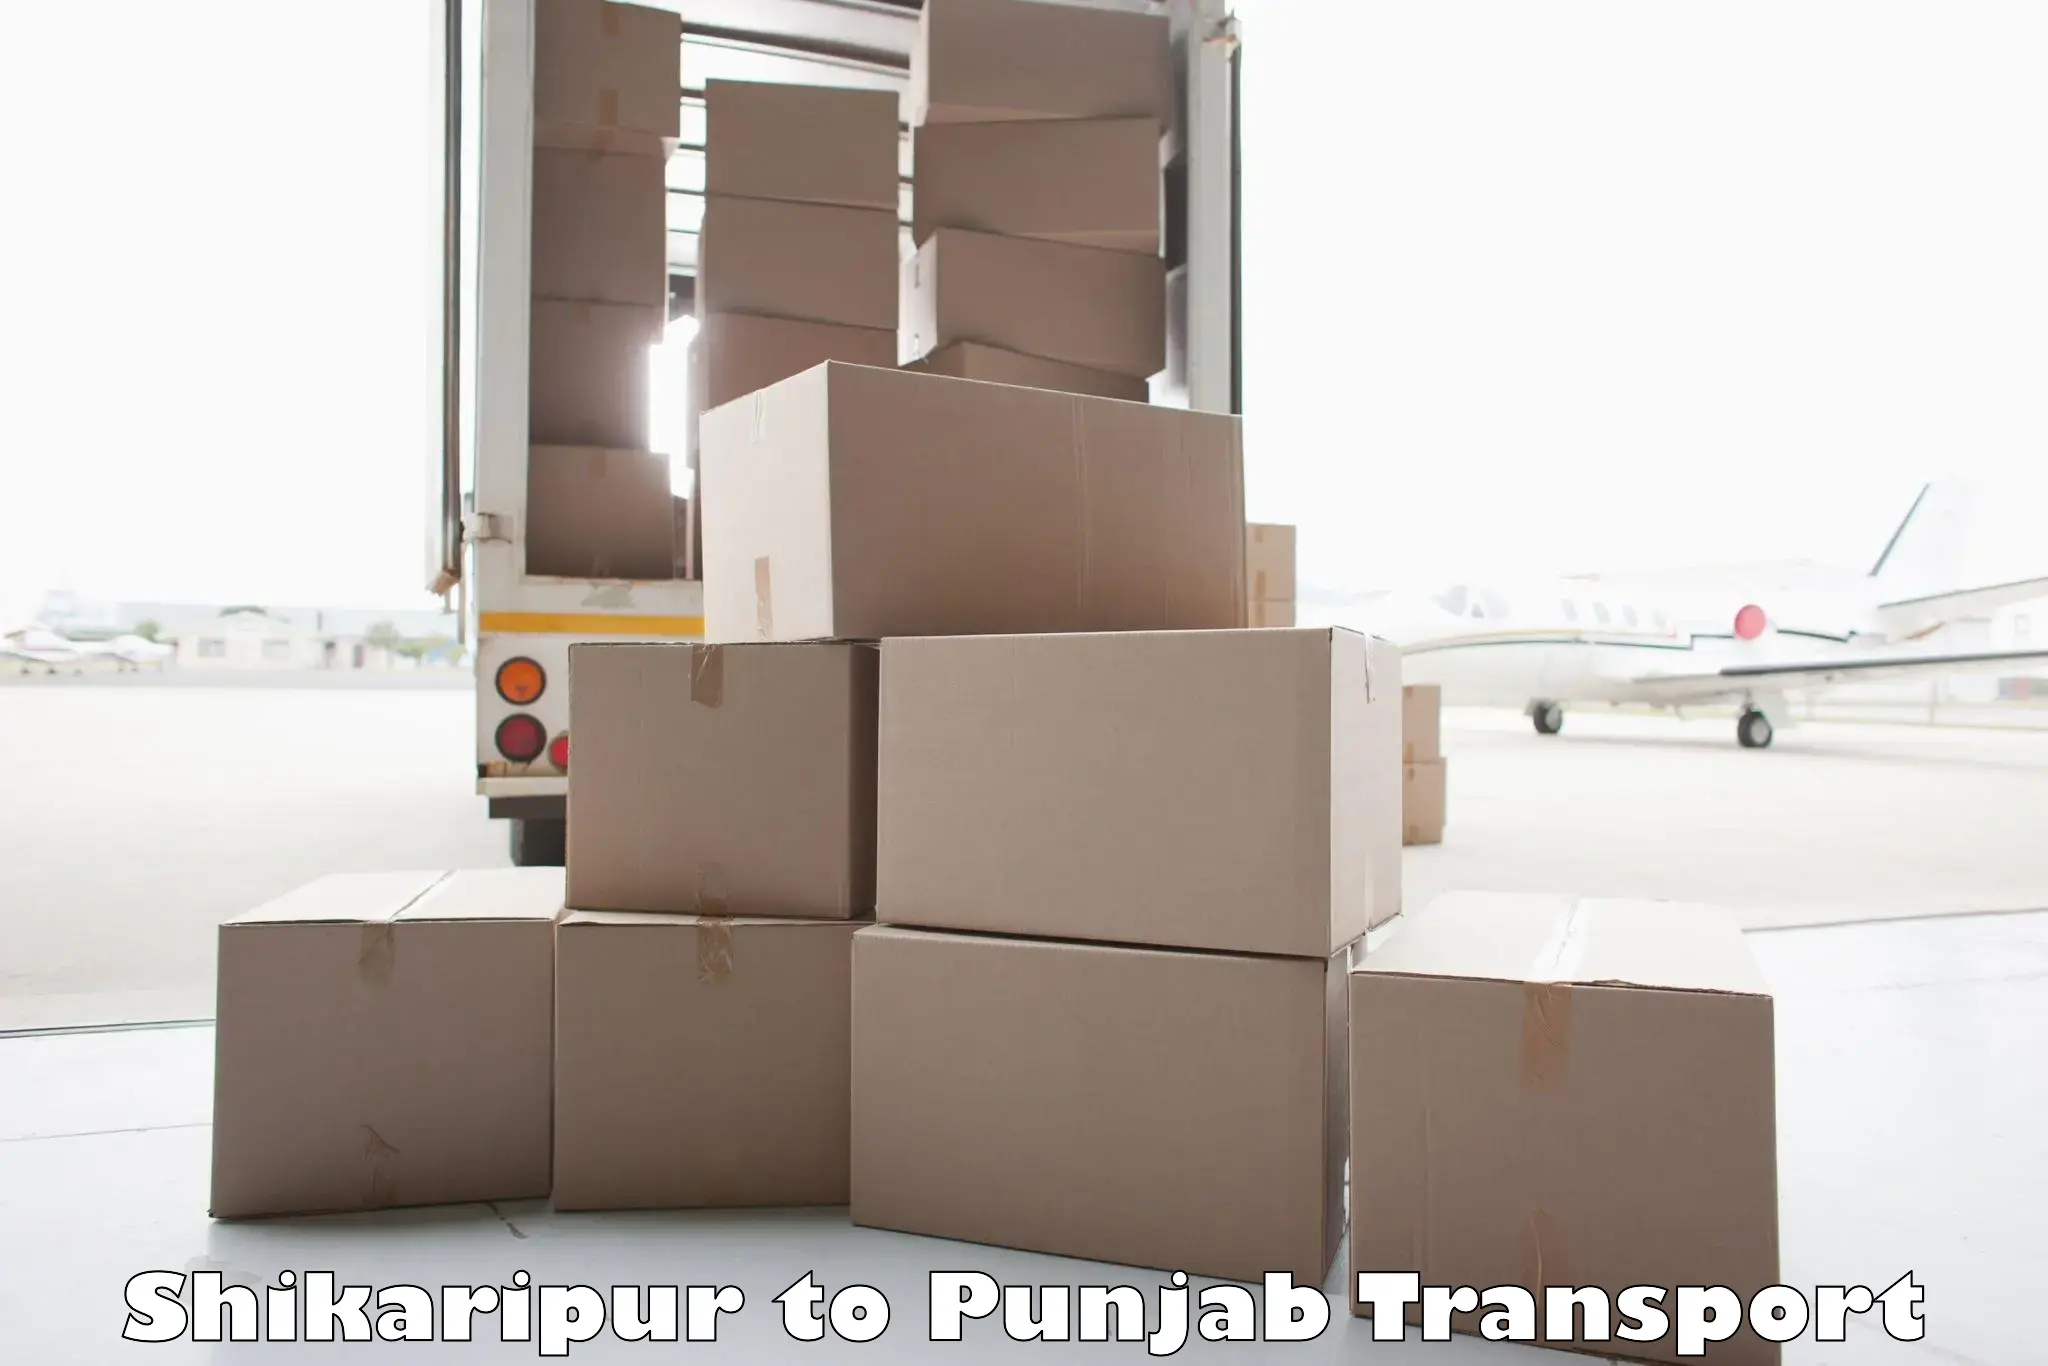 Delivery service Shikaripur to Anandpur Sahib